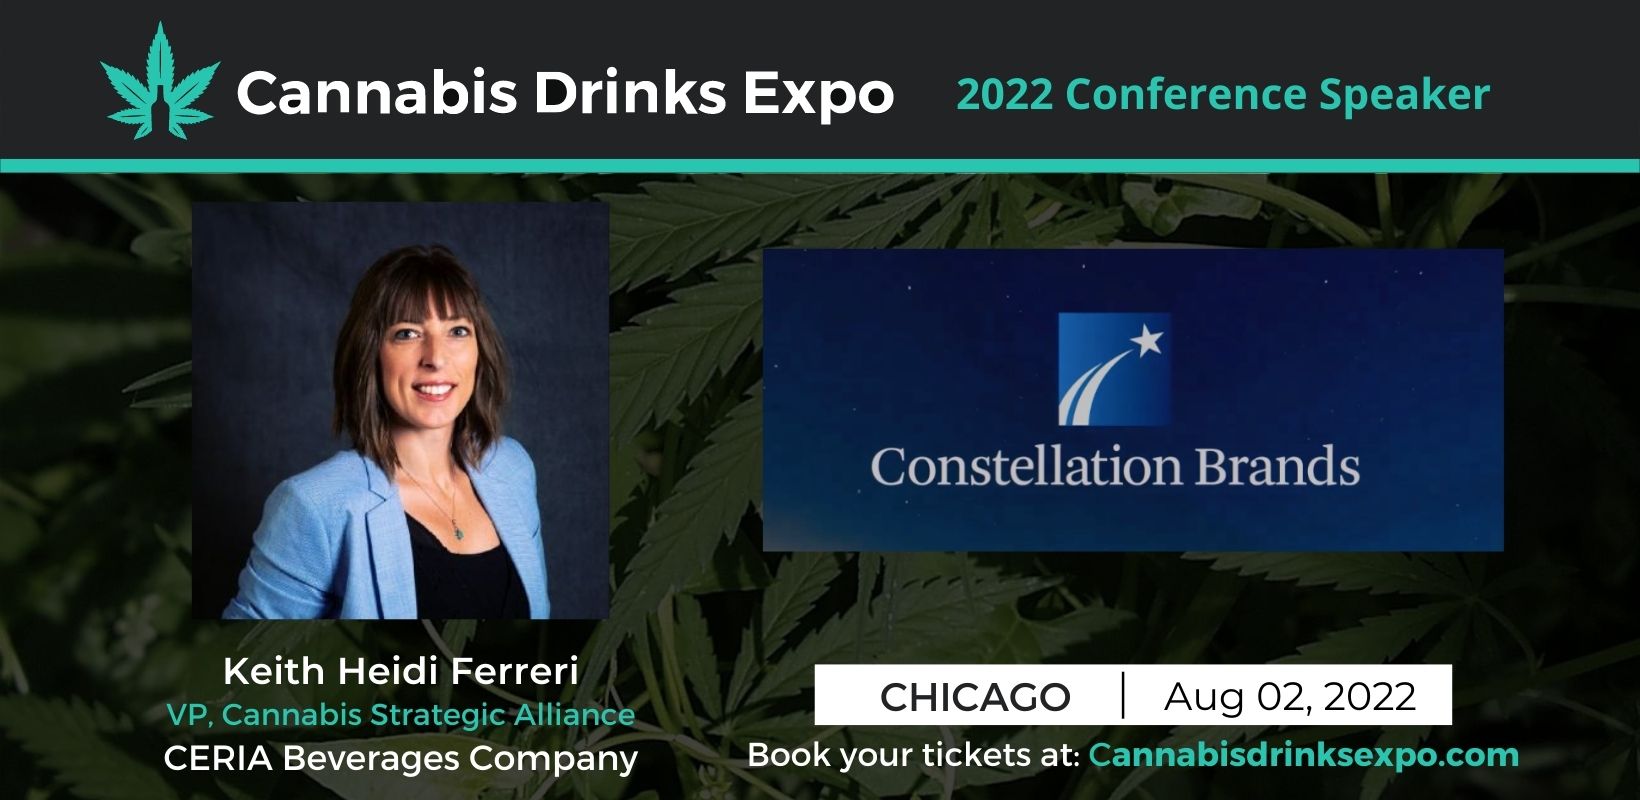 Photo for: Heidi Ferreri, VP, Cannabis Strategic Alliance at Constellation Brands, Inc. will speak at CDE 2022.